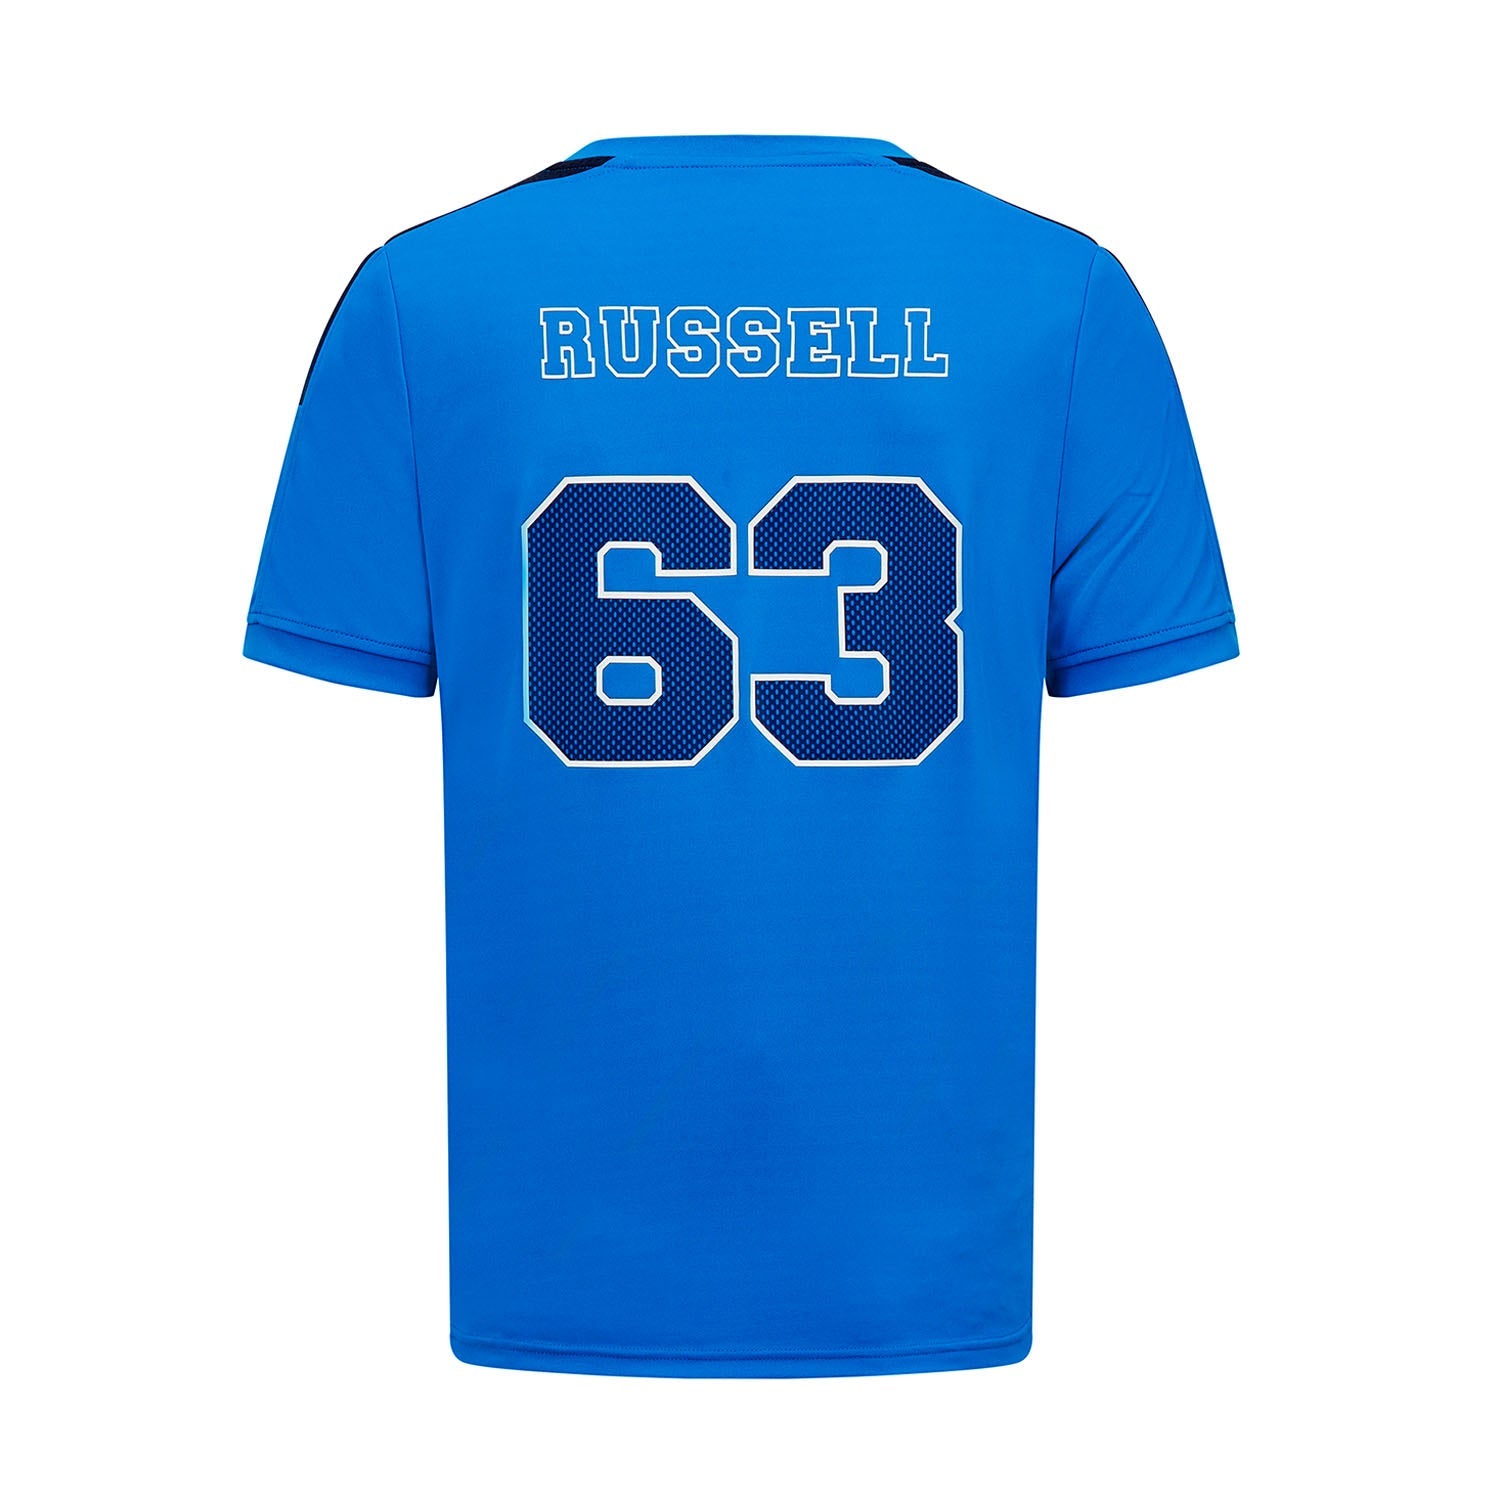 Russell 2023 Sports T-Shirt - Mercedes-AMG Petronas - Fueler store